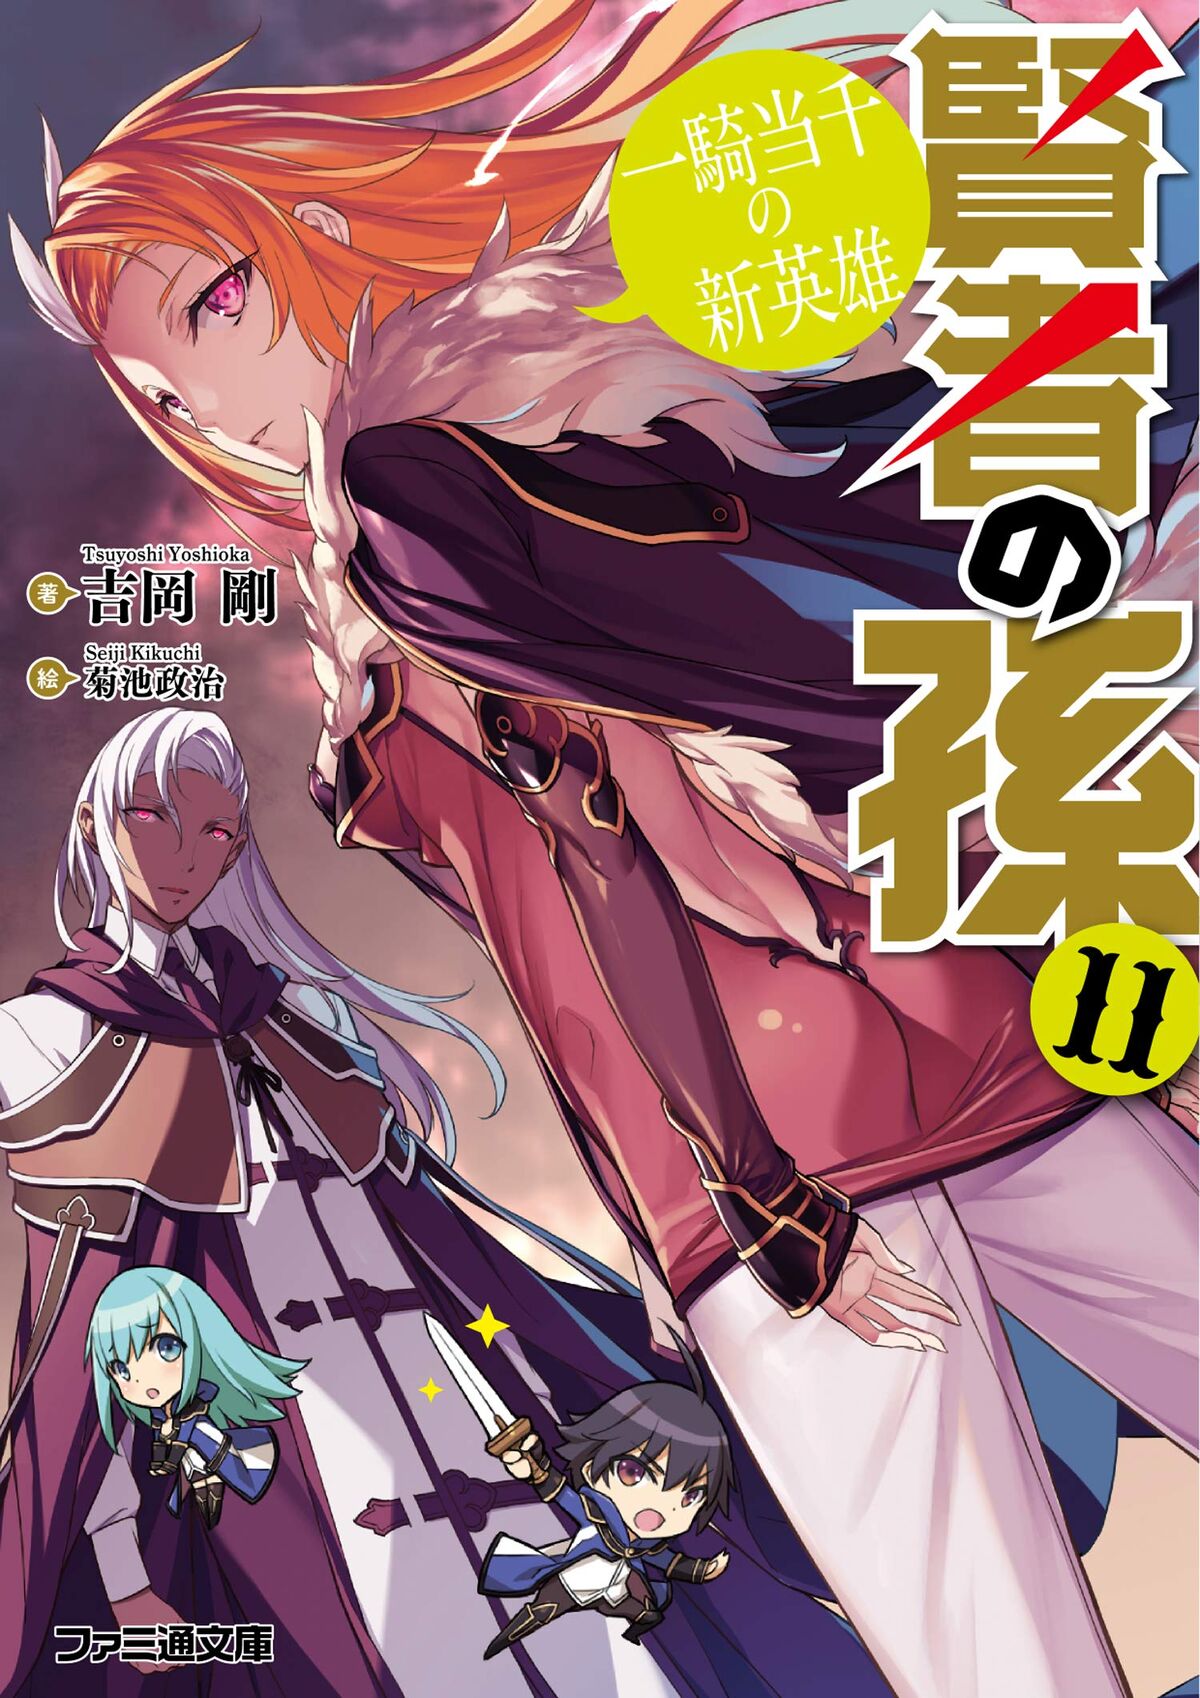 Light Novel Volume 11 | Kenja no Mago Wiki | Fandom